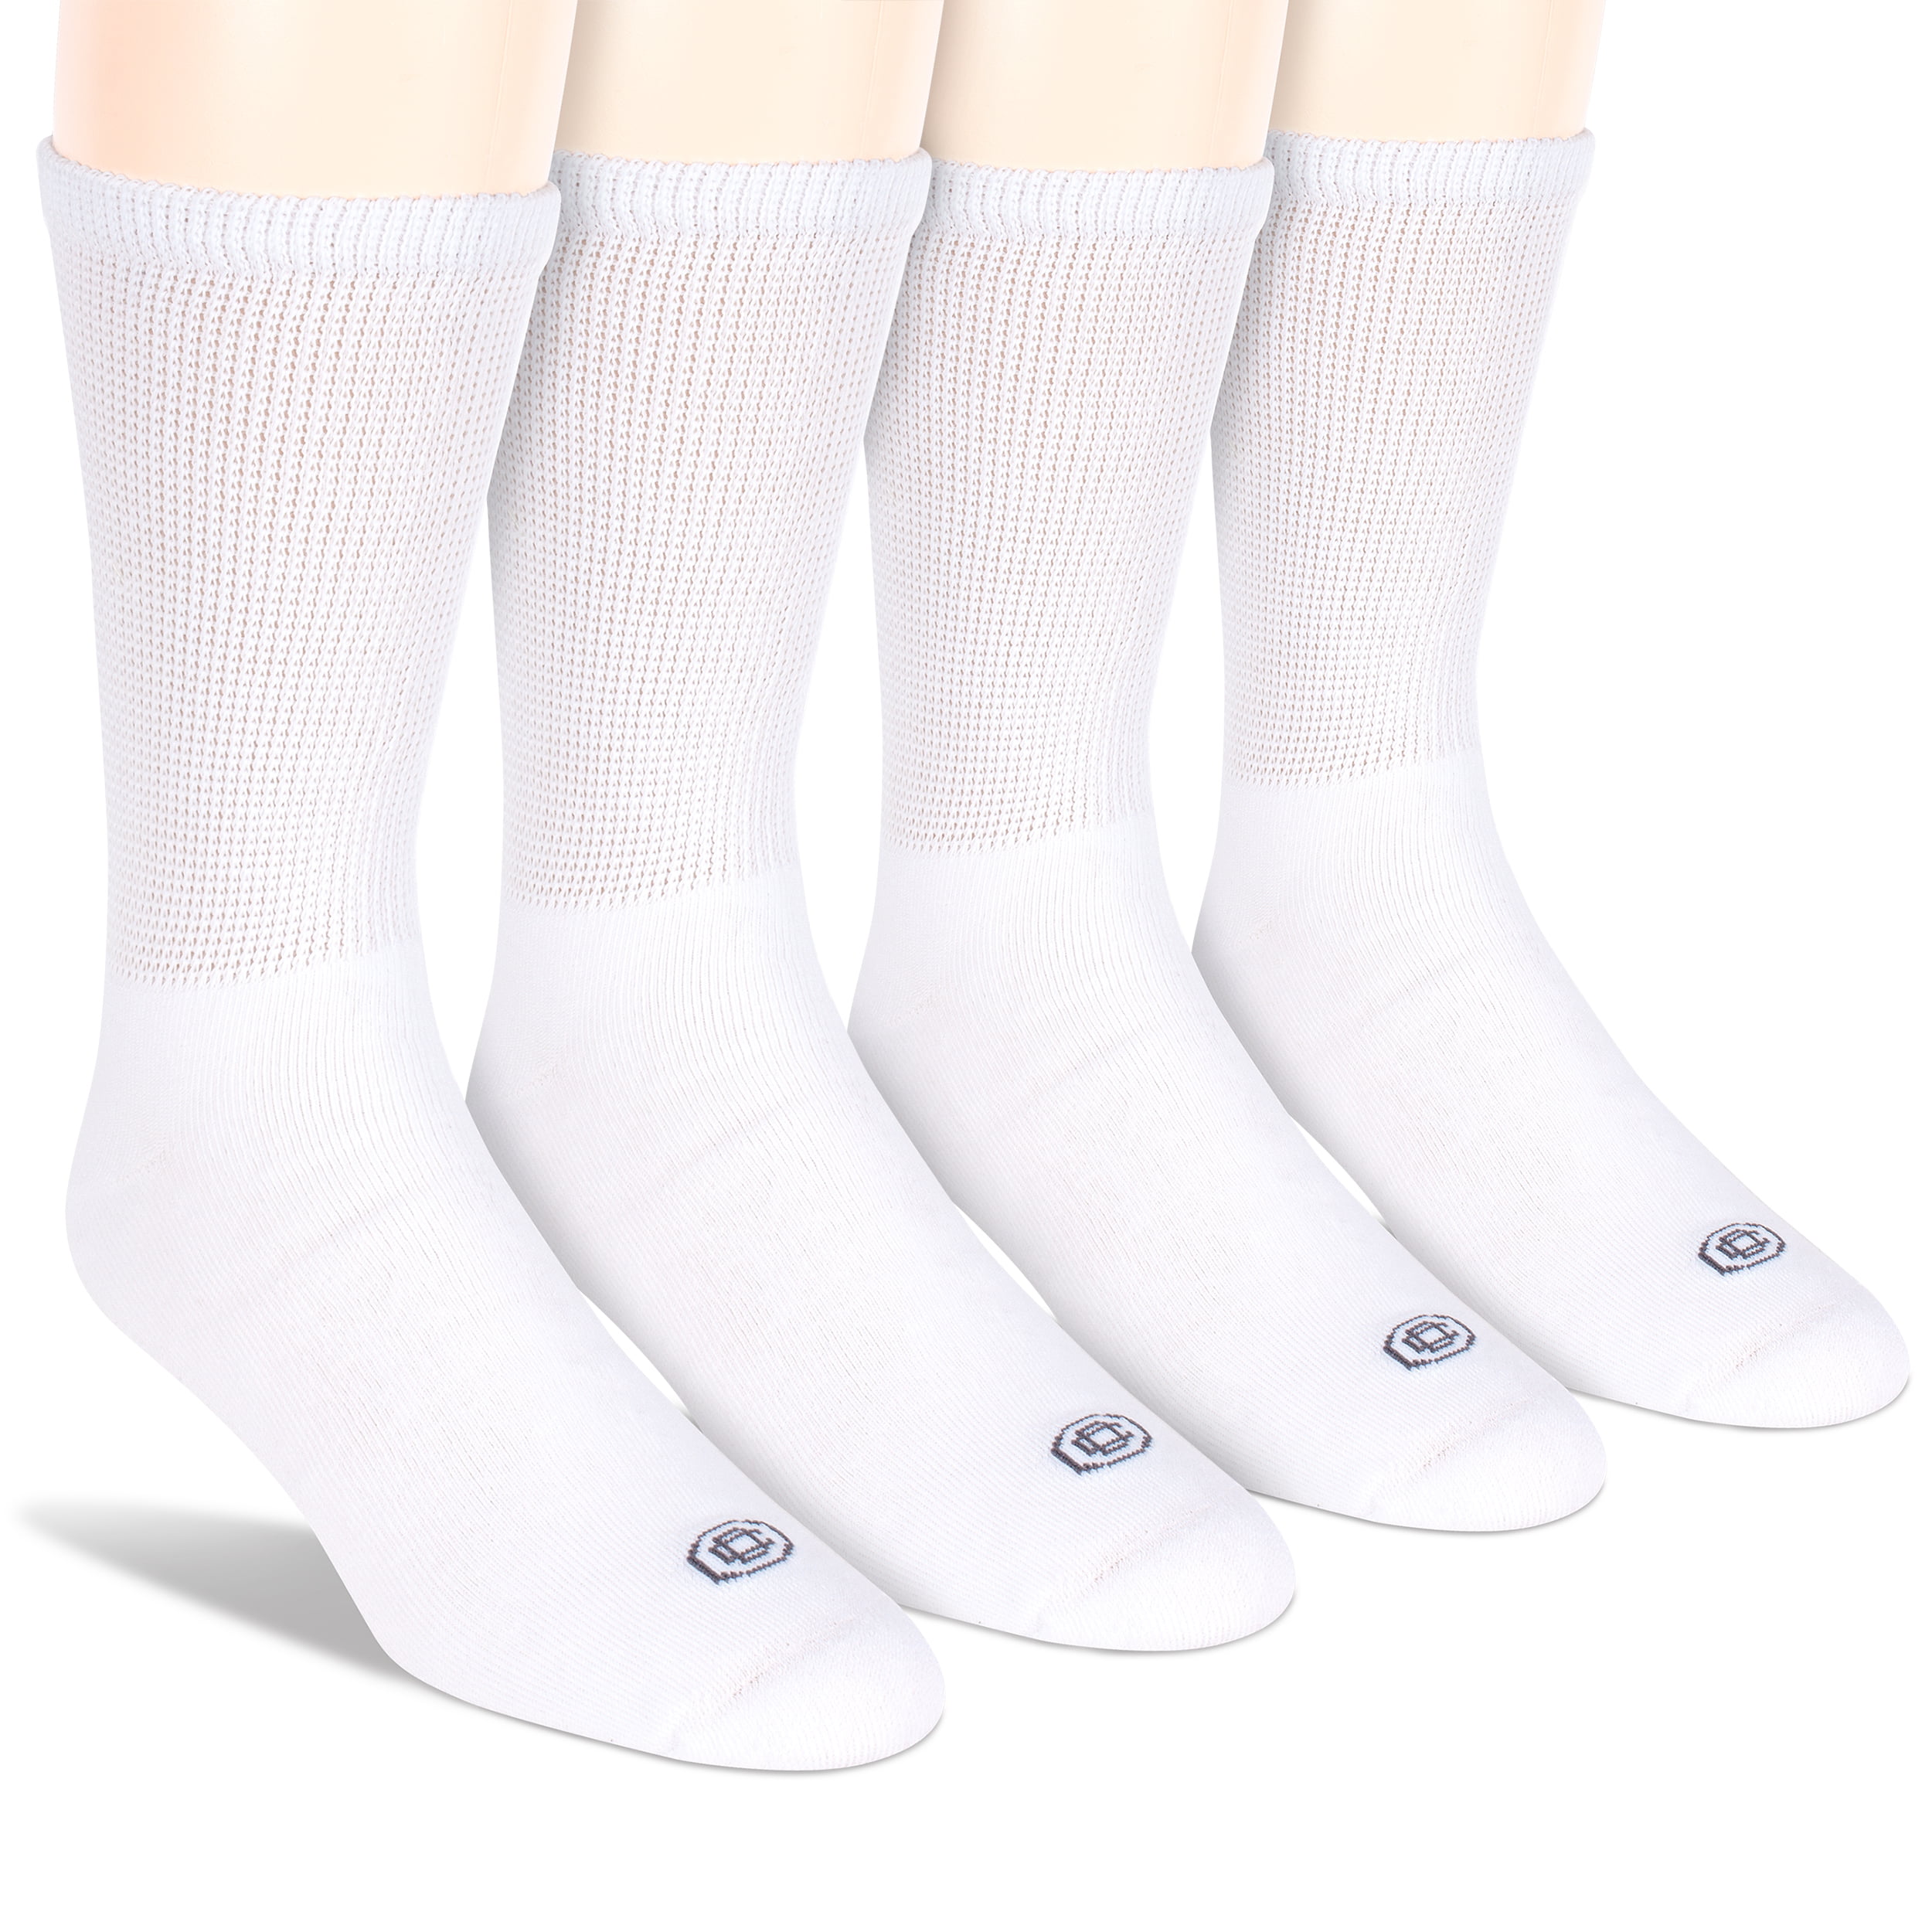 Doctor's Choice Diabetic Crew Socks, Wide Non-Binding Top, Circulatory,  Full Cushion, 4 Pack, White, Large, Sock Size 10-13 - Walmart.com